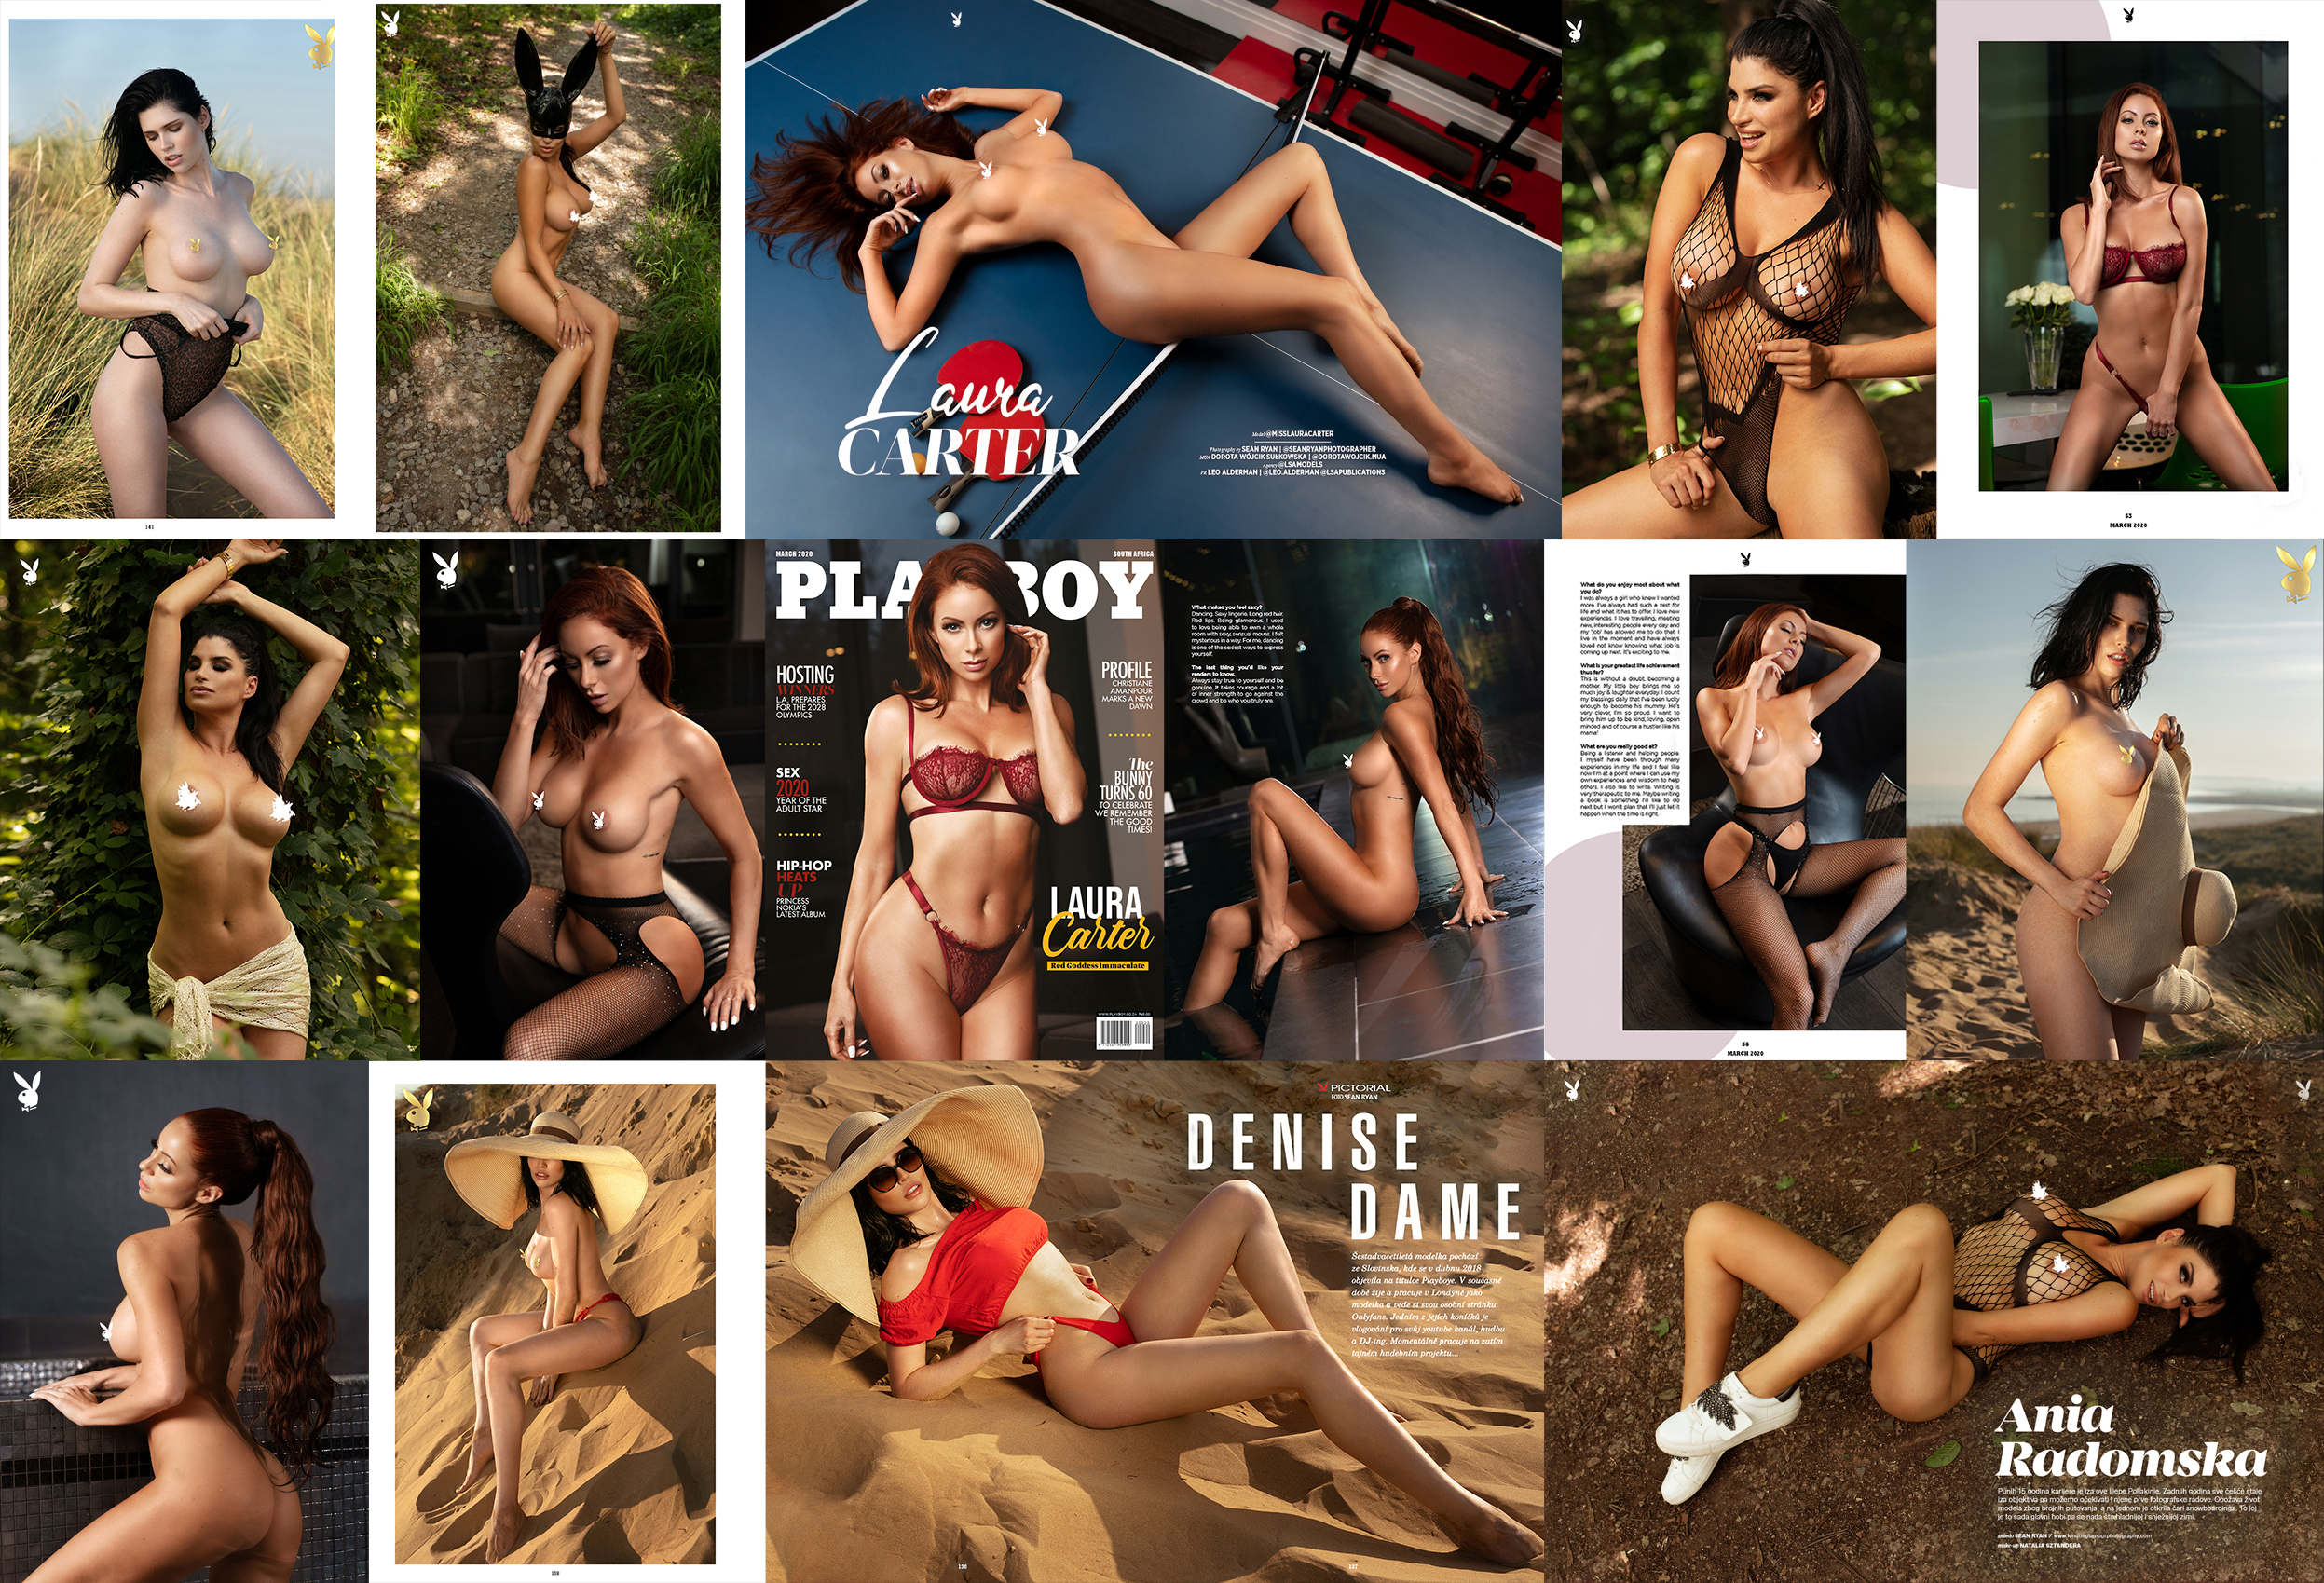 Worldwide Playboy Publications by www.londonglamourphotography.com